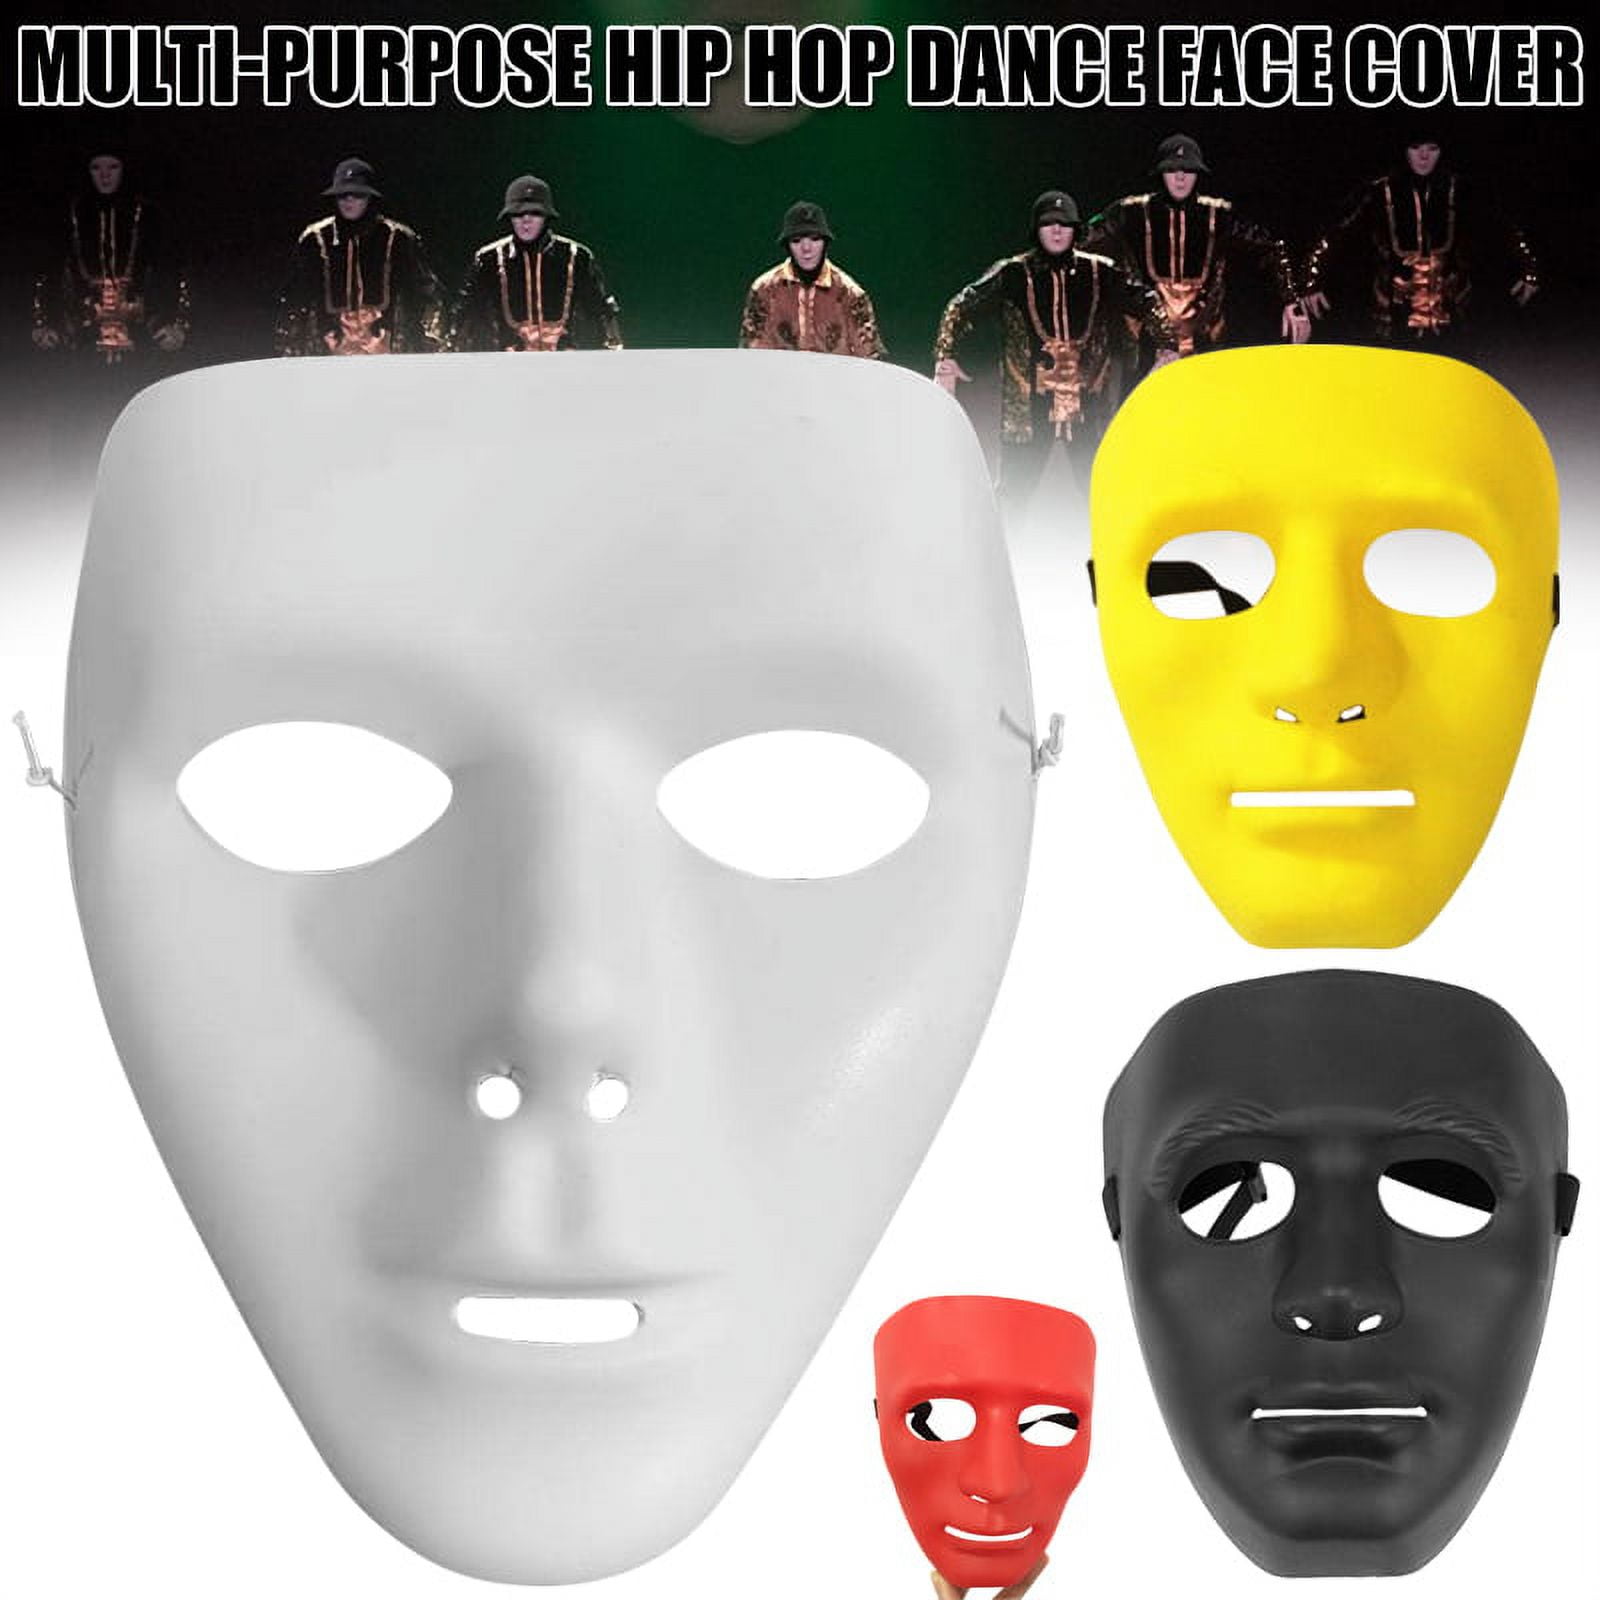 12PCS Paper DIY White Mask Full Face Opera Masquerade Mask Halloween Mask